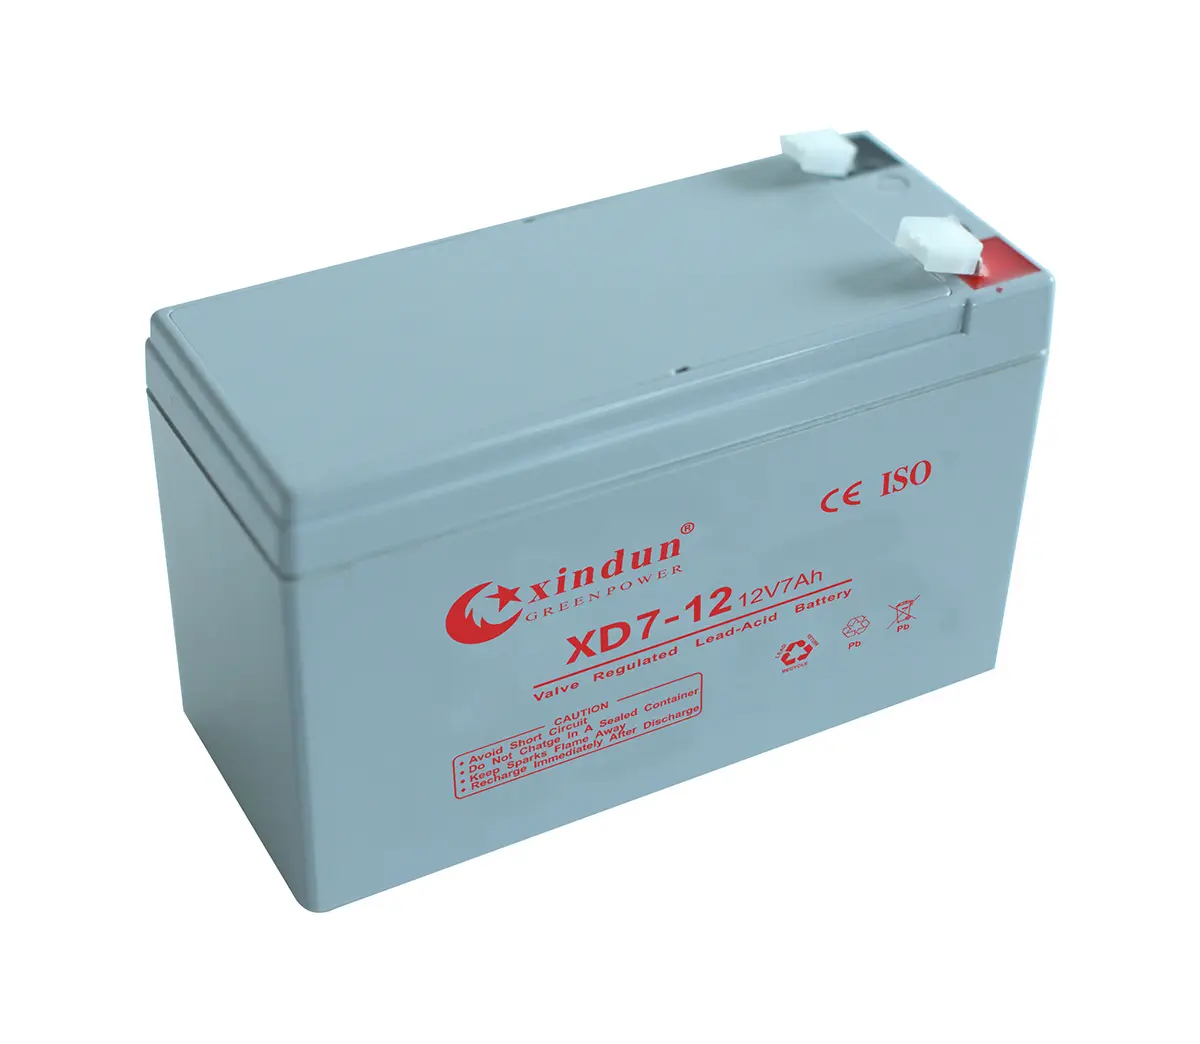 Valve Regulated cars box powerwall home battery manufacturer 12v 7ah auto solar batteries sealed lead acid batteries